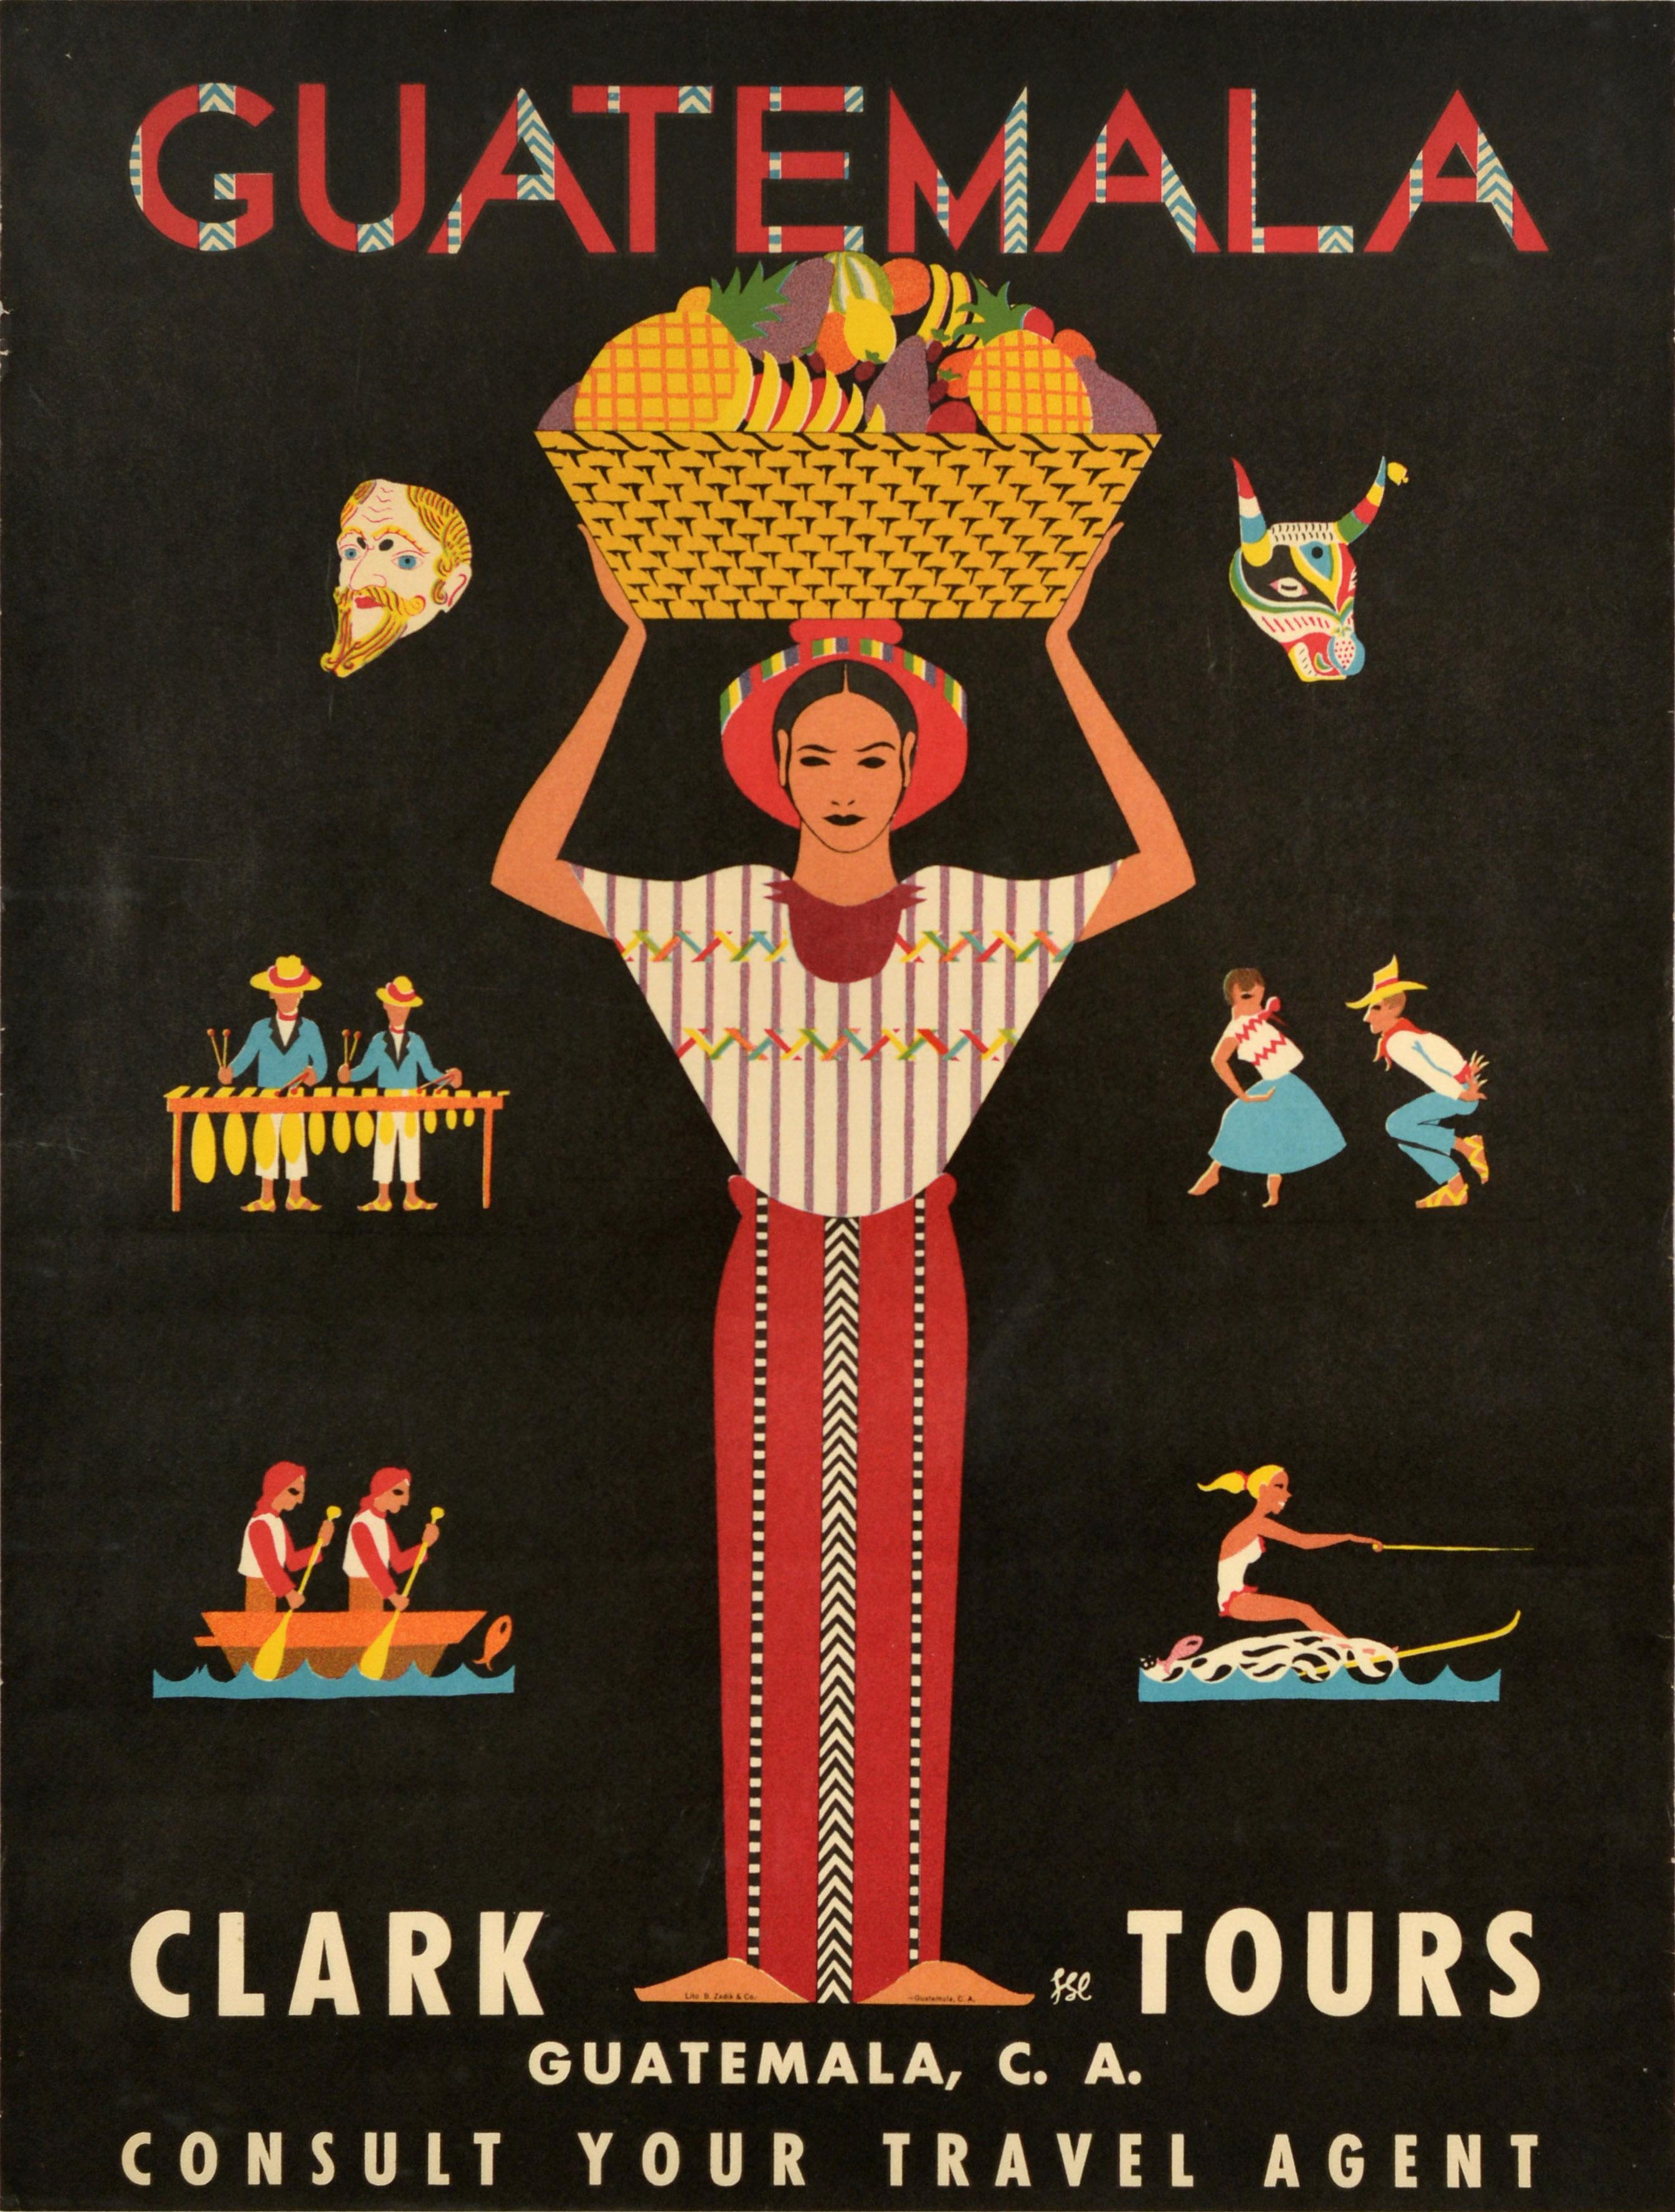 Unknown Print - Original Vintage Travel Advertising Poster Guatemala Clark Tours Midcentury Art